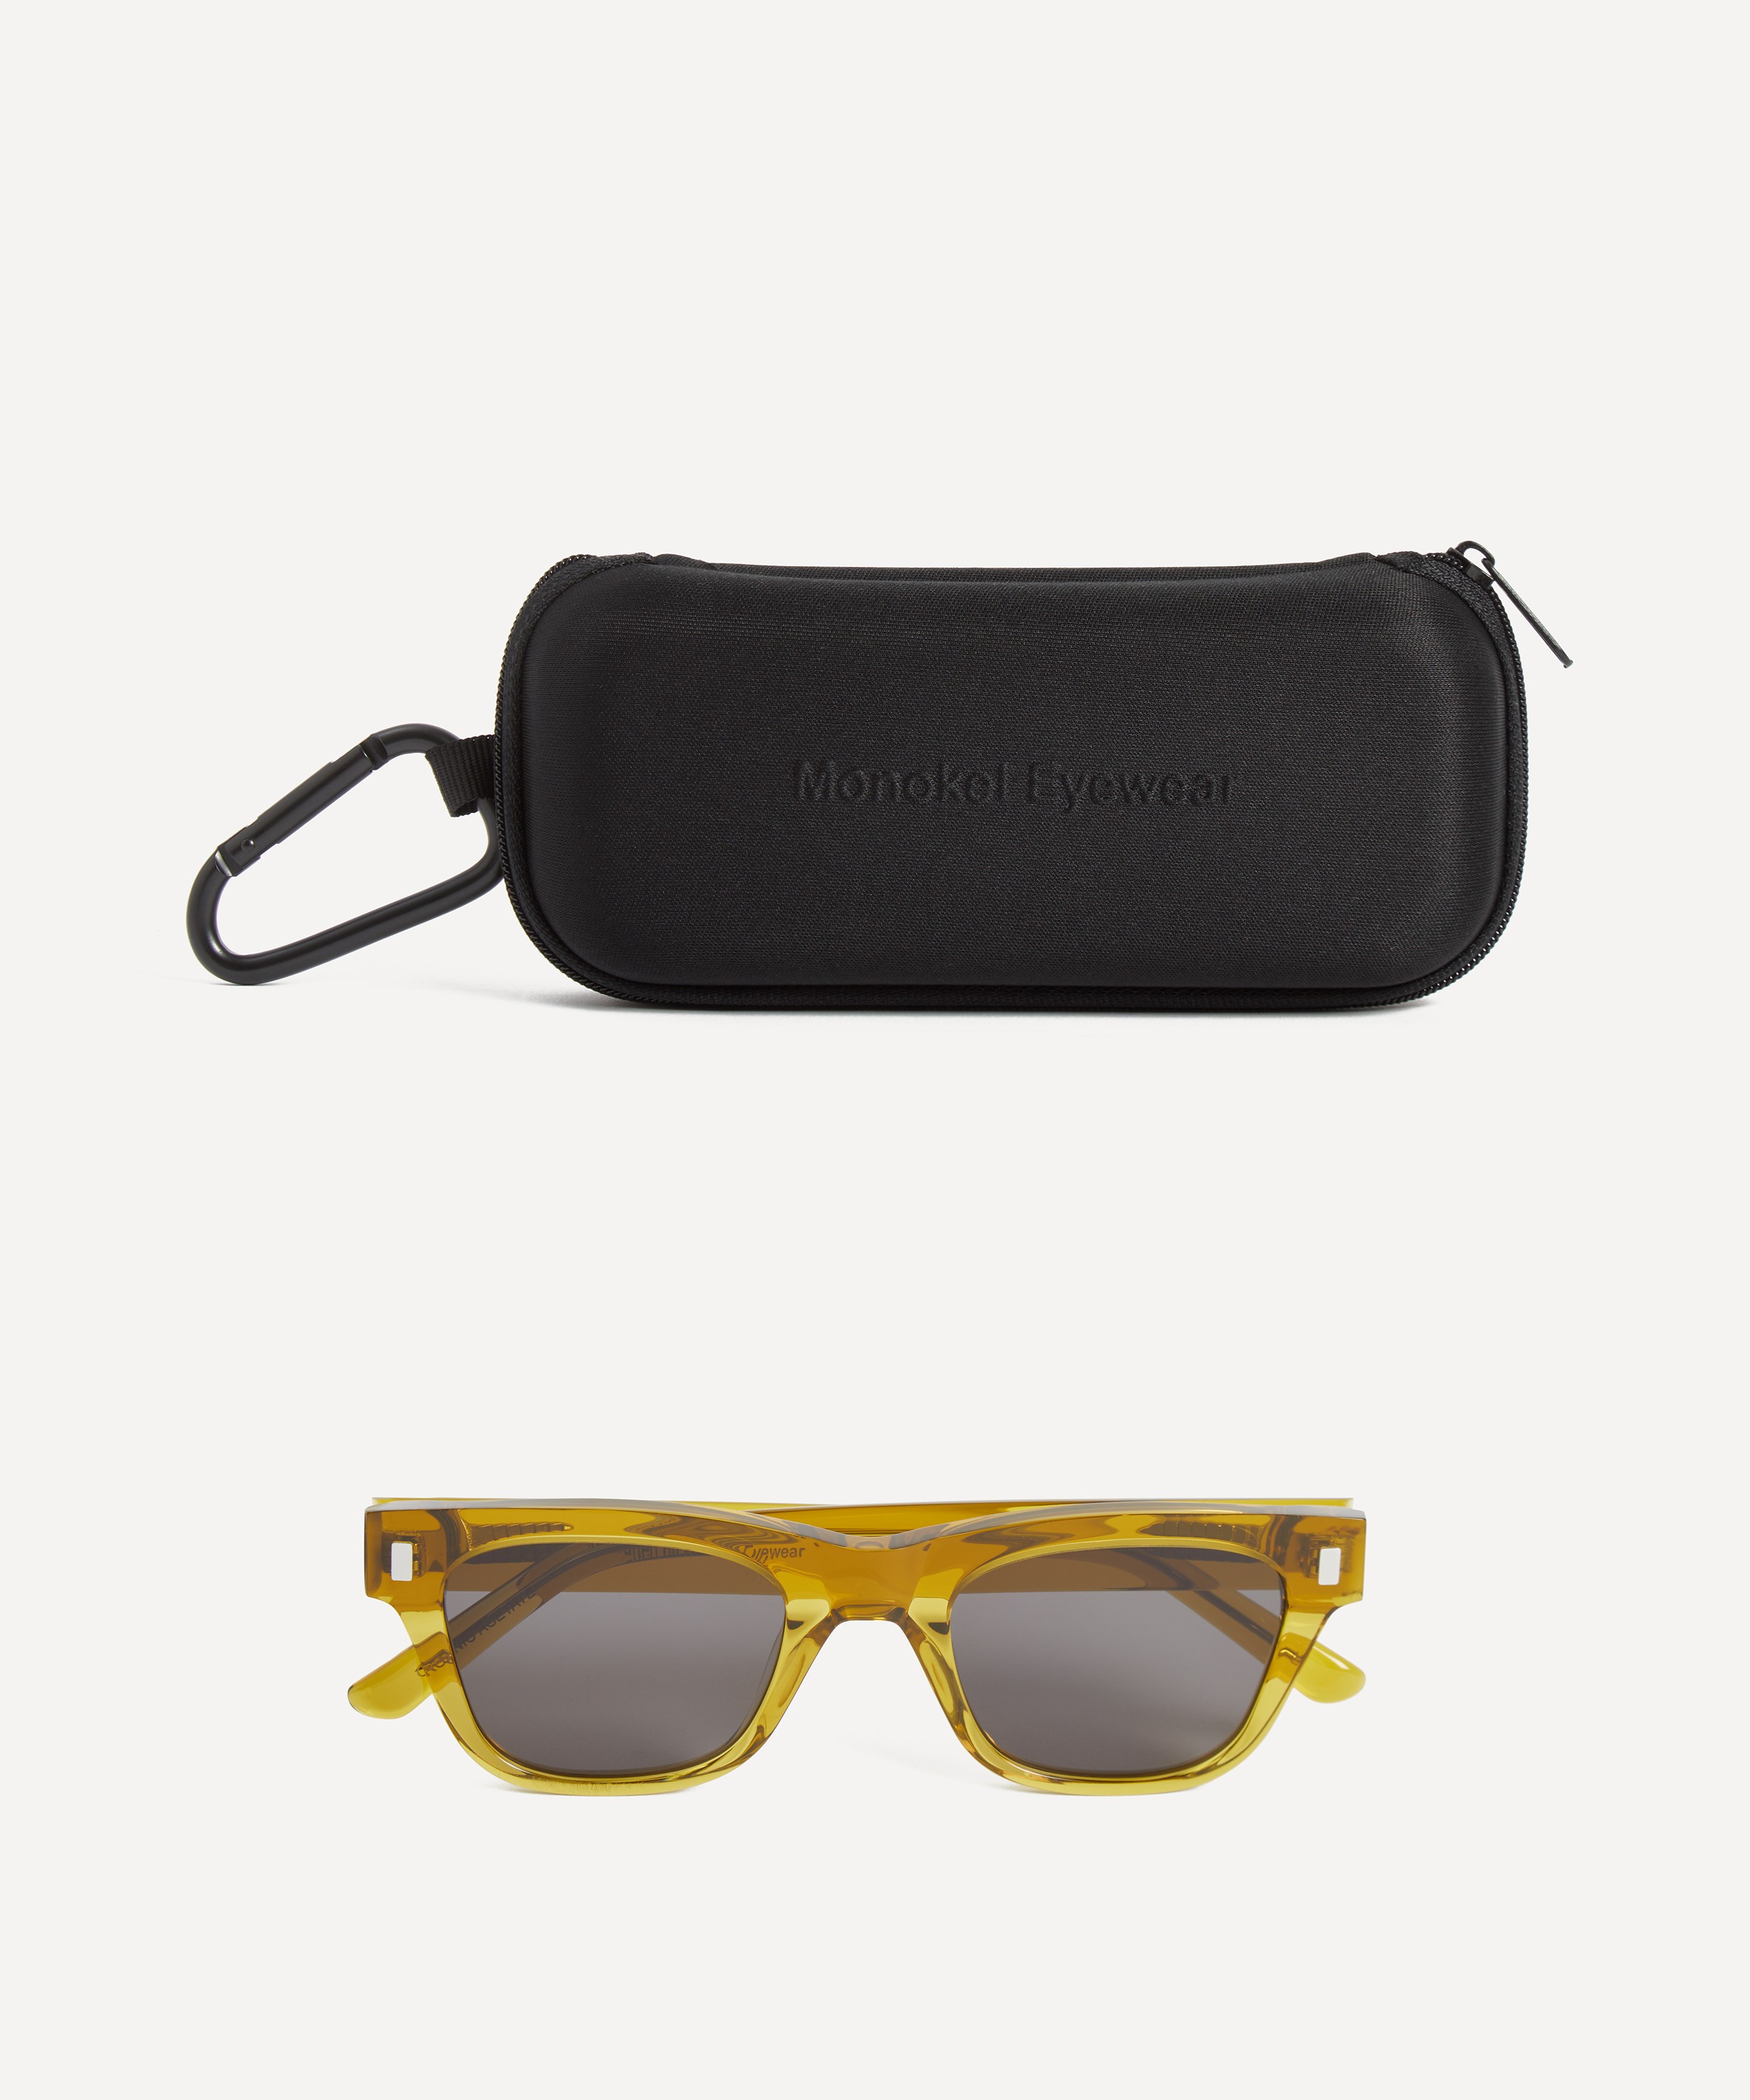 Monokel Eyewear - Aki Square Sunglasses image number 3